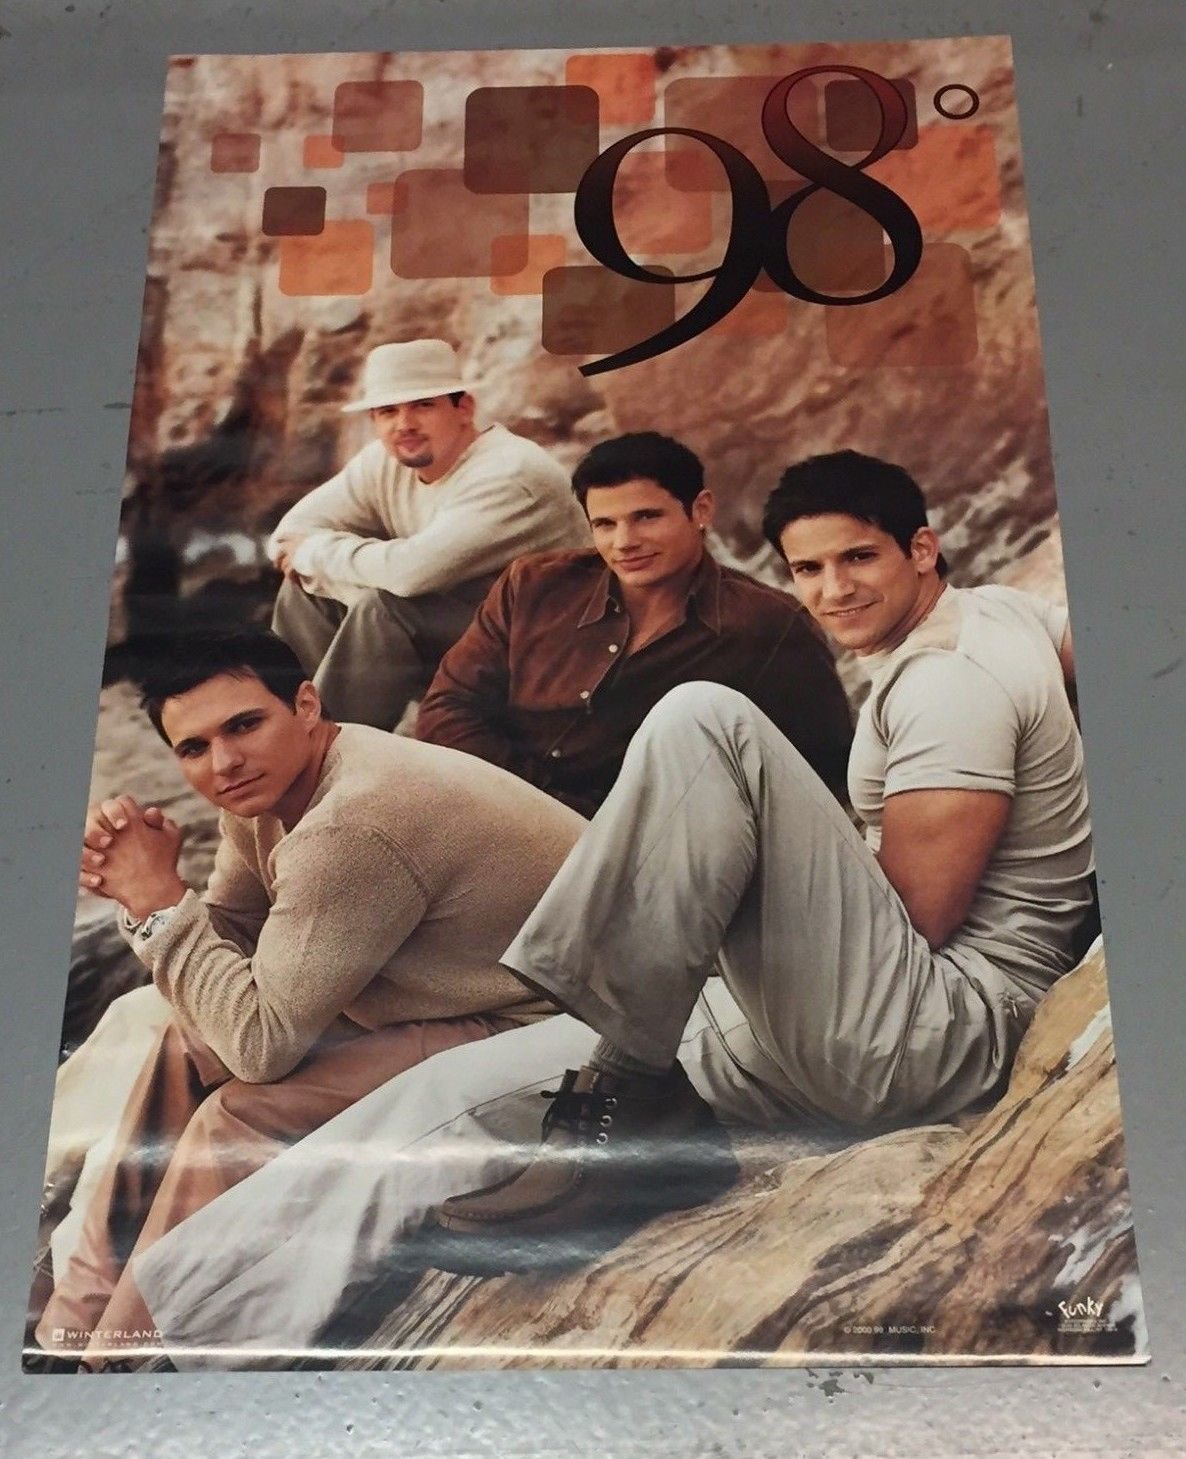 98 Degrees Boy Band Vintage 1998 Poster 22.5 x 34.5